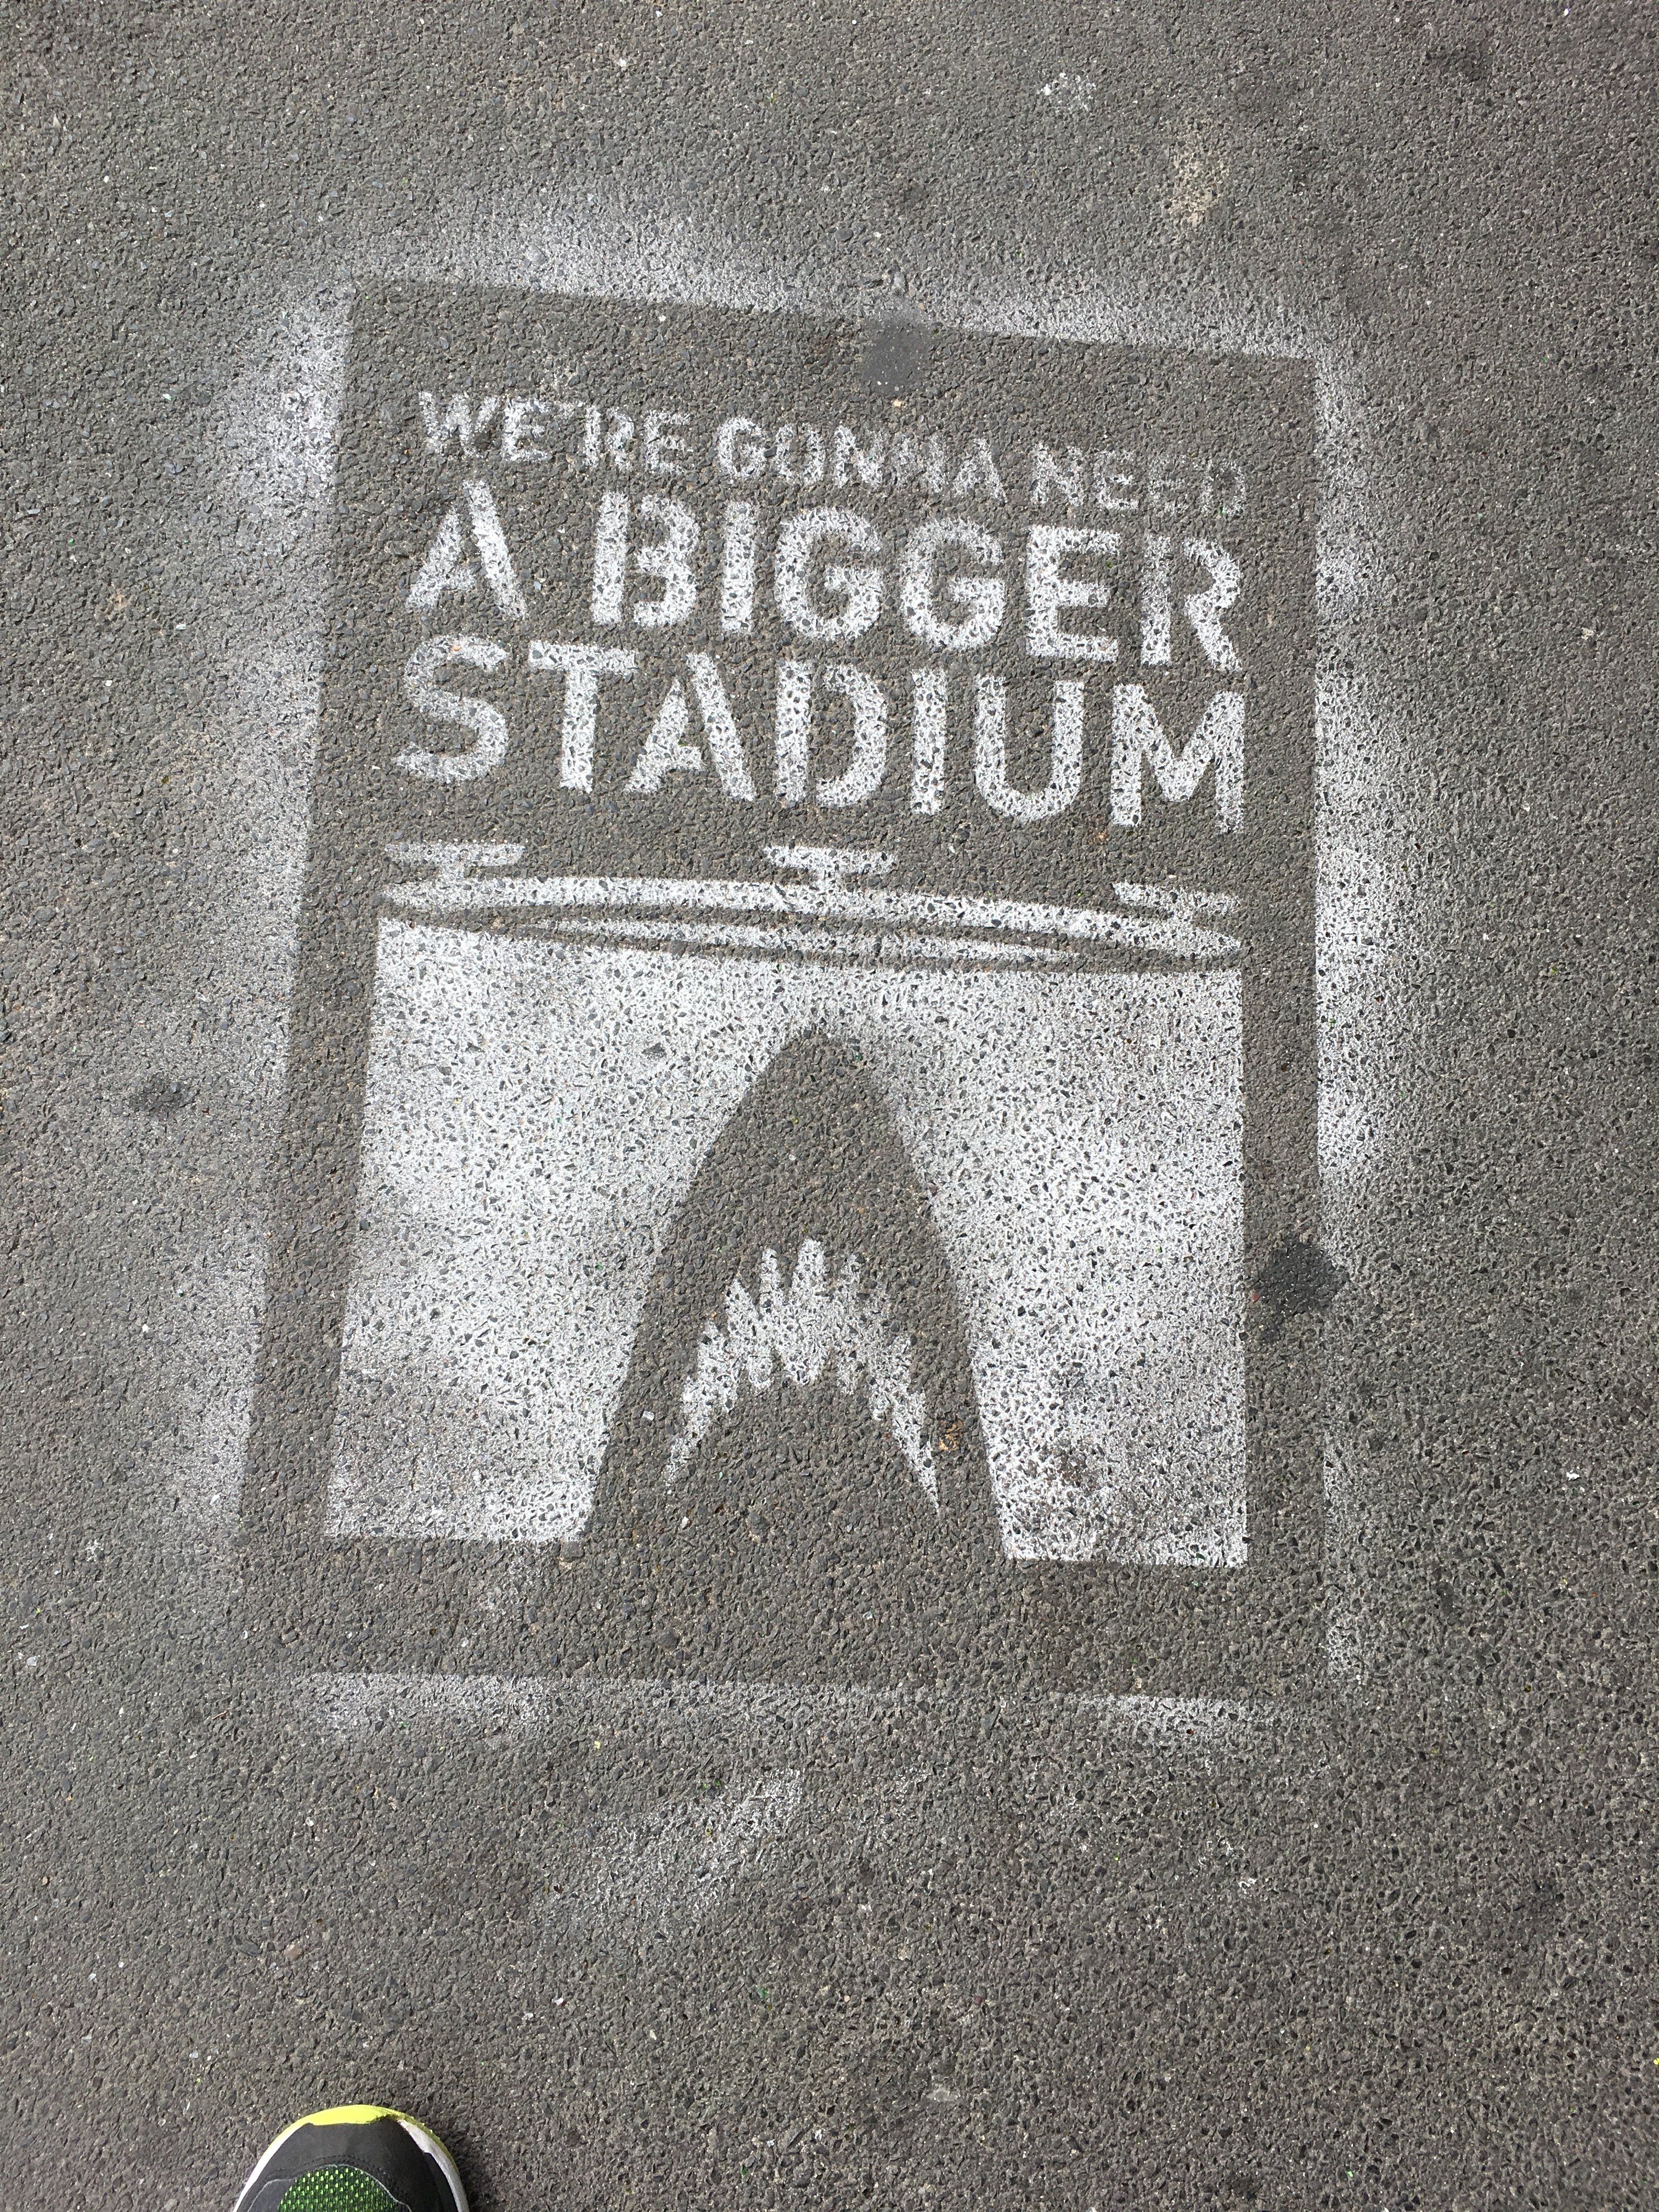 We're Gonna Need a Bigger Stadium - footpath stencil